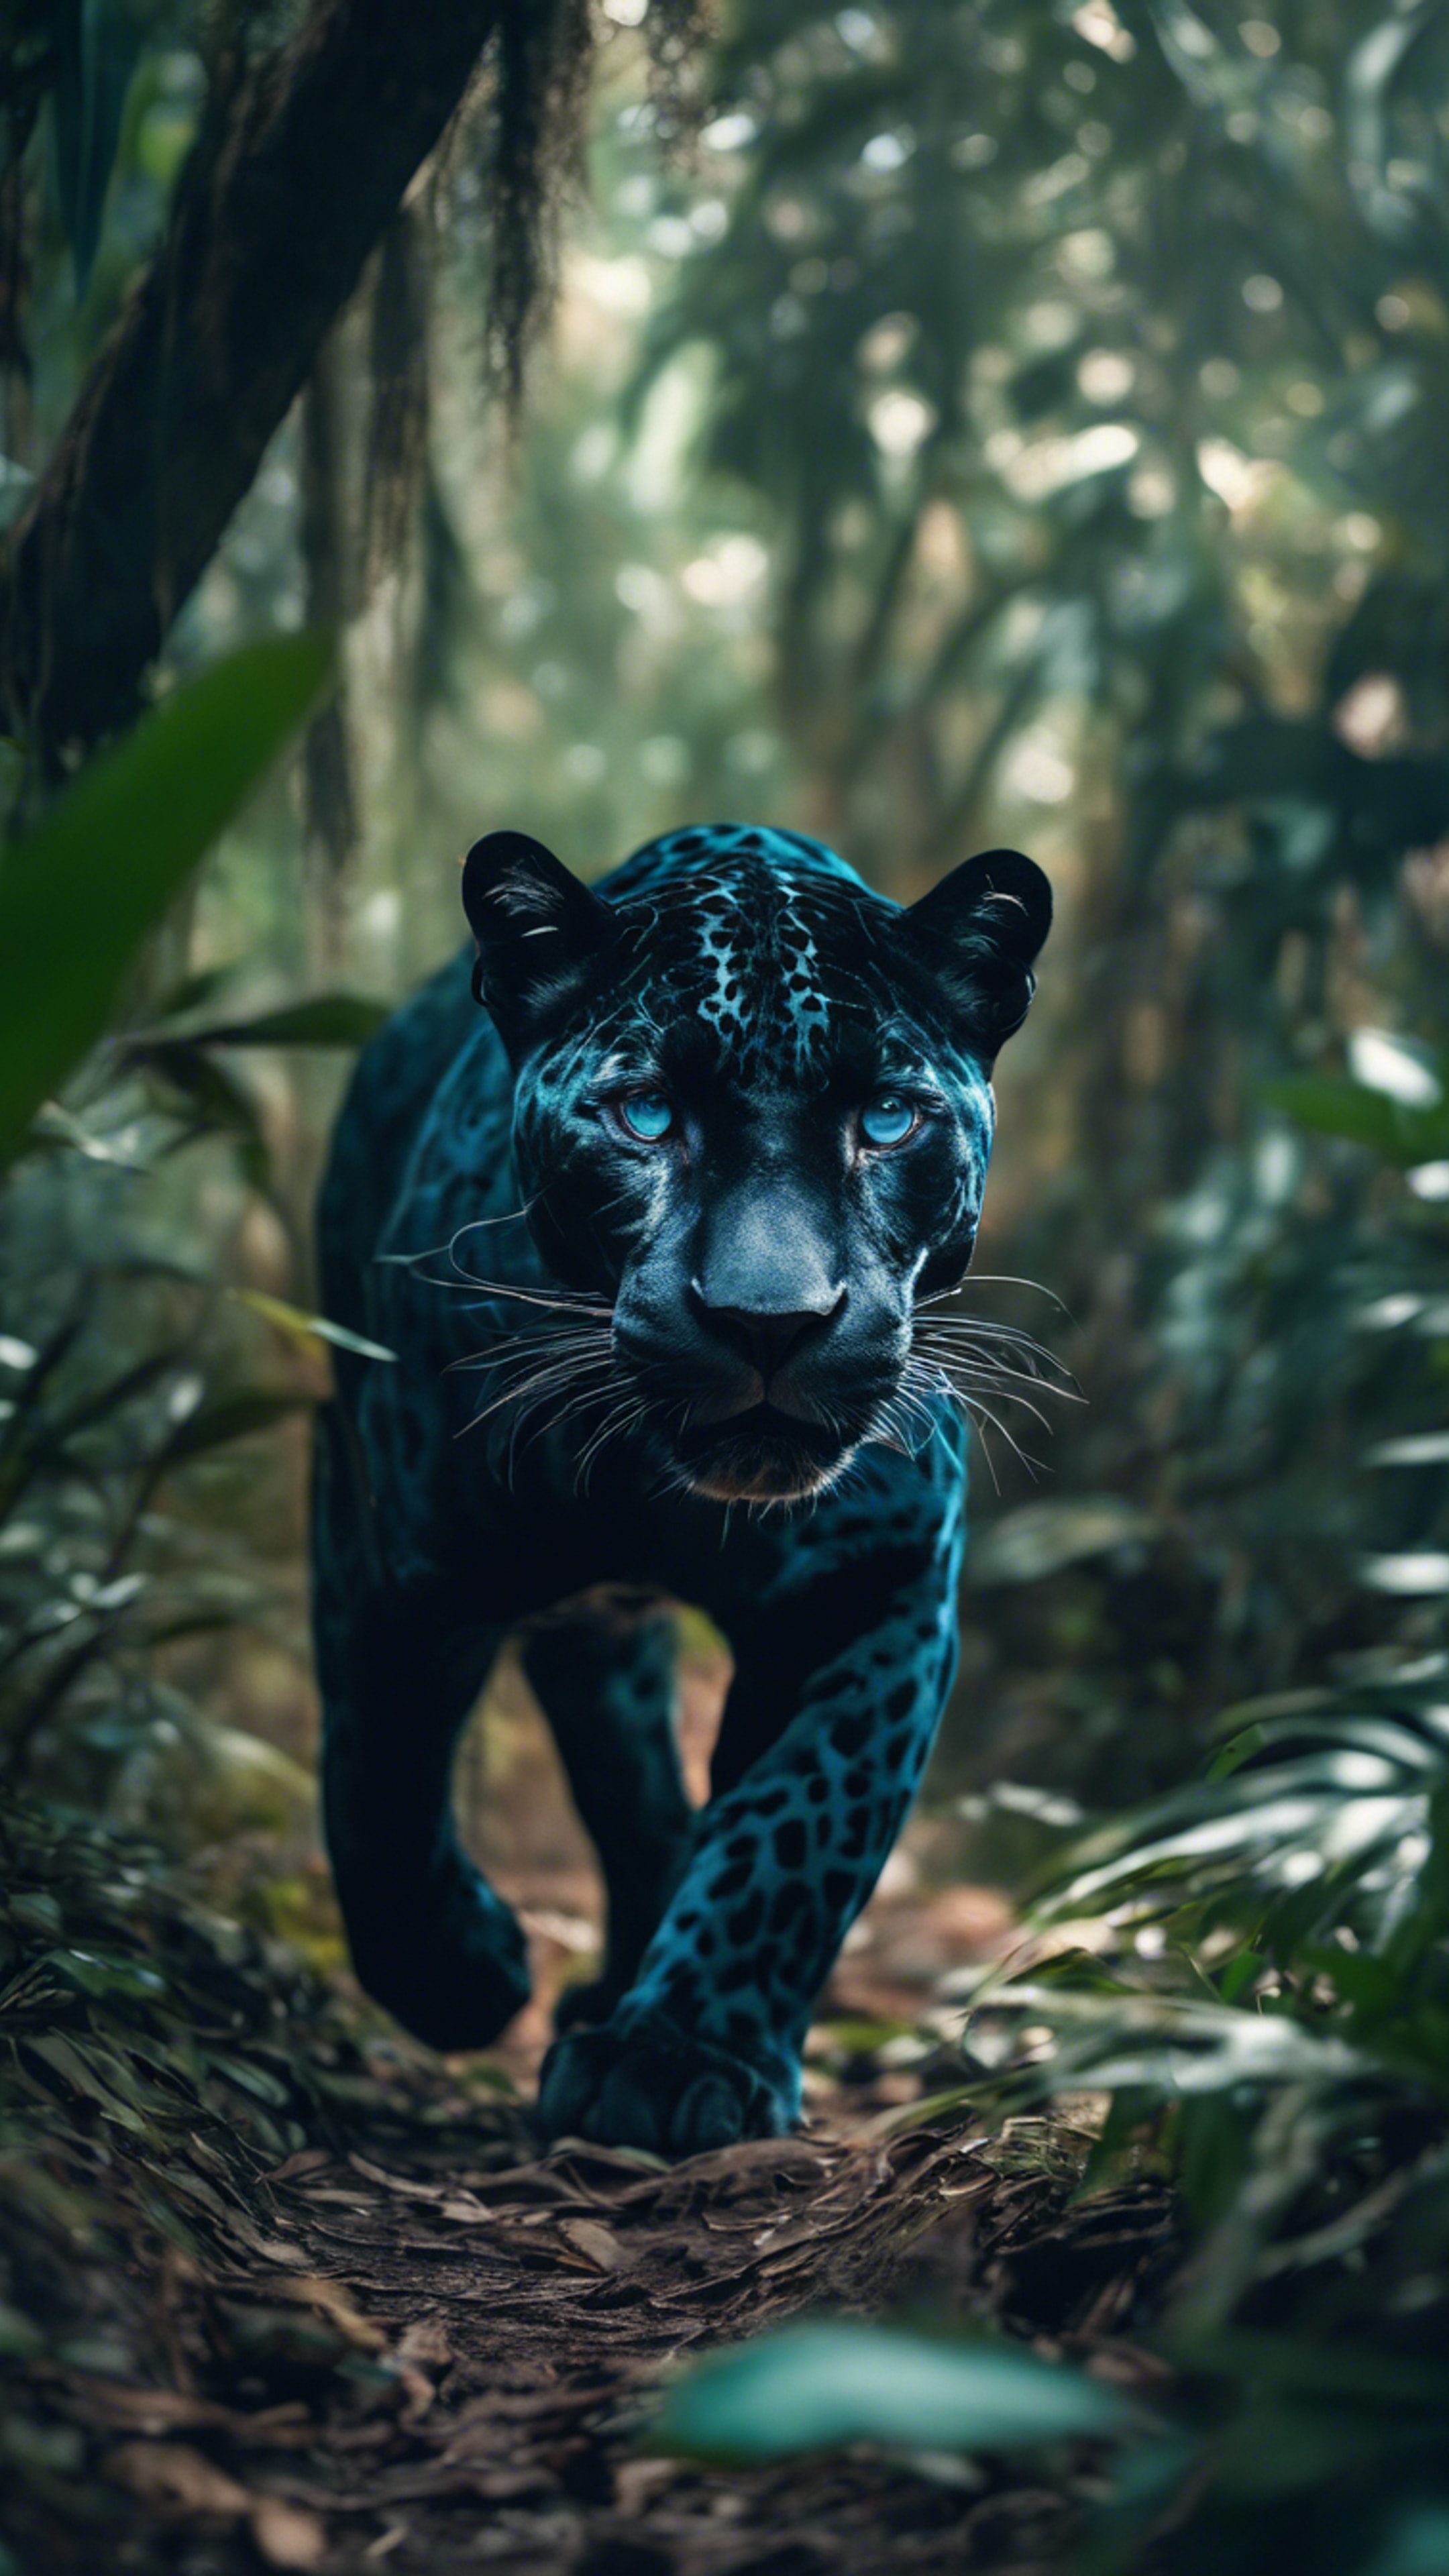 A black jaguar, eyes glowing with cool neon blue hues, prowling through a dark jungle. Tapeta[06d4596780d7432e9648]